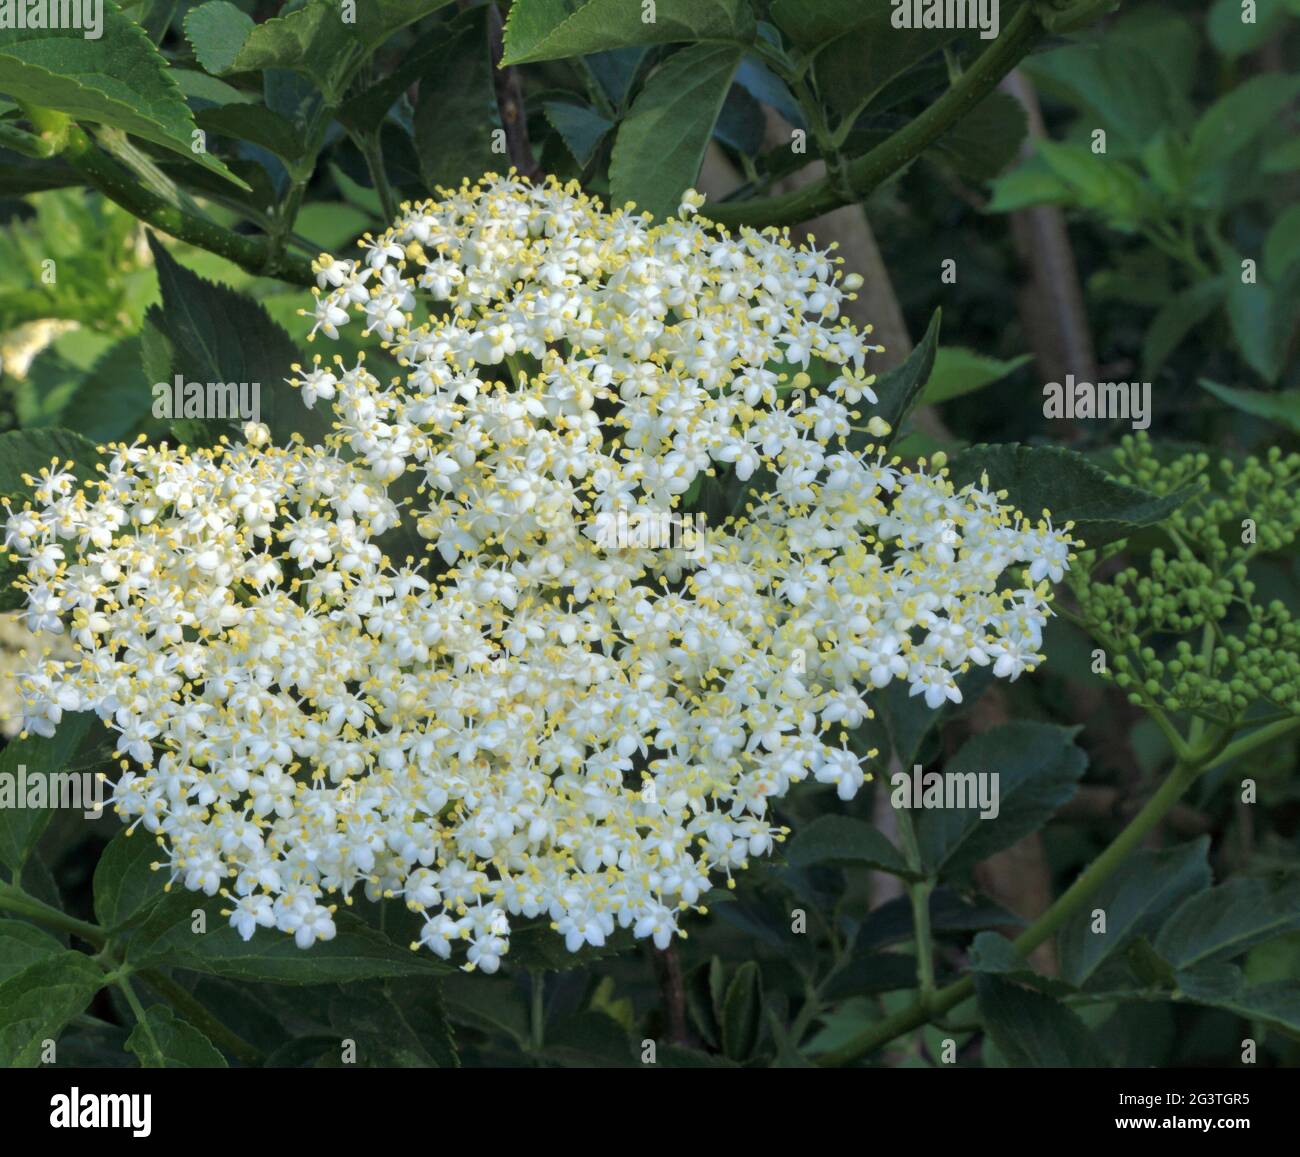 Sambucus nigra, Elderflower, fiore bianco, fogliame, piante da giardino, siepe, cespuglio, albero Foto Stock